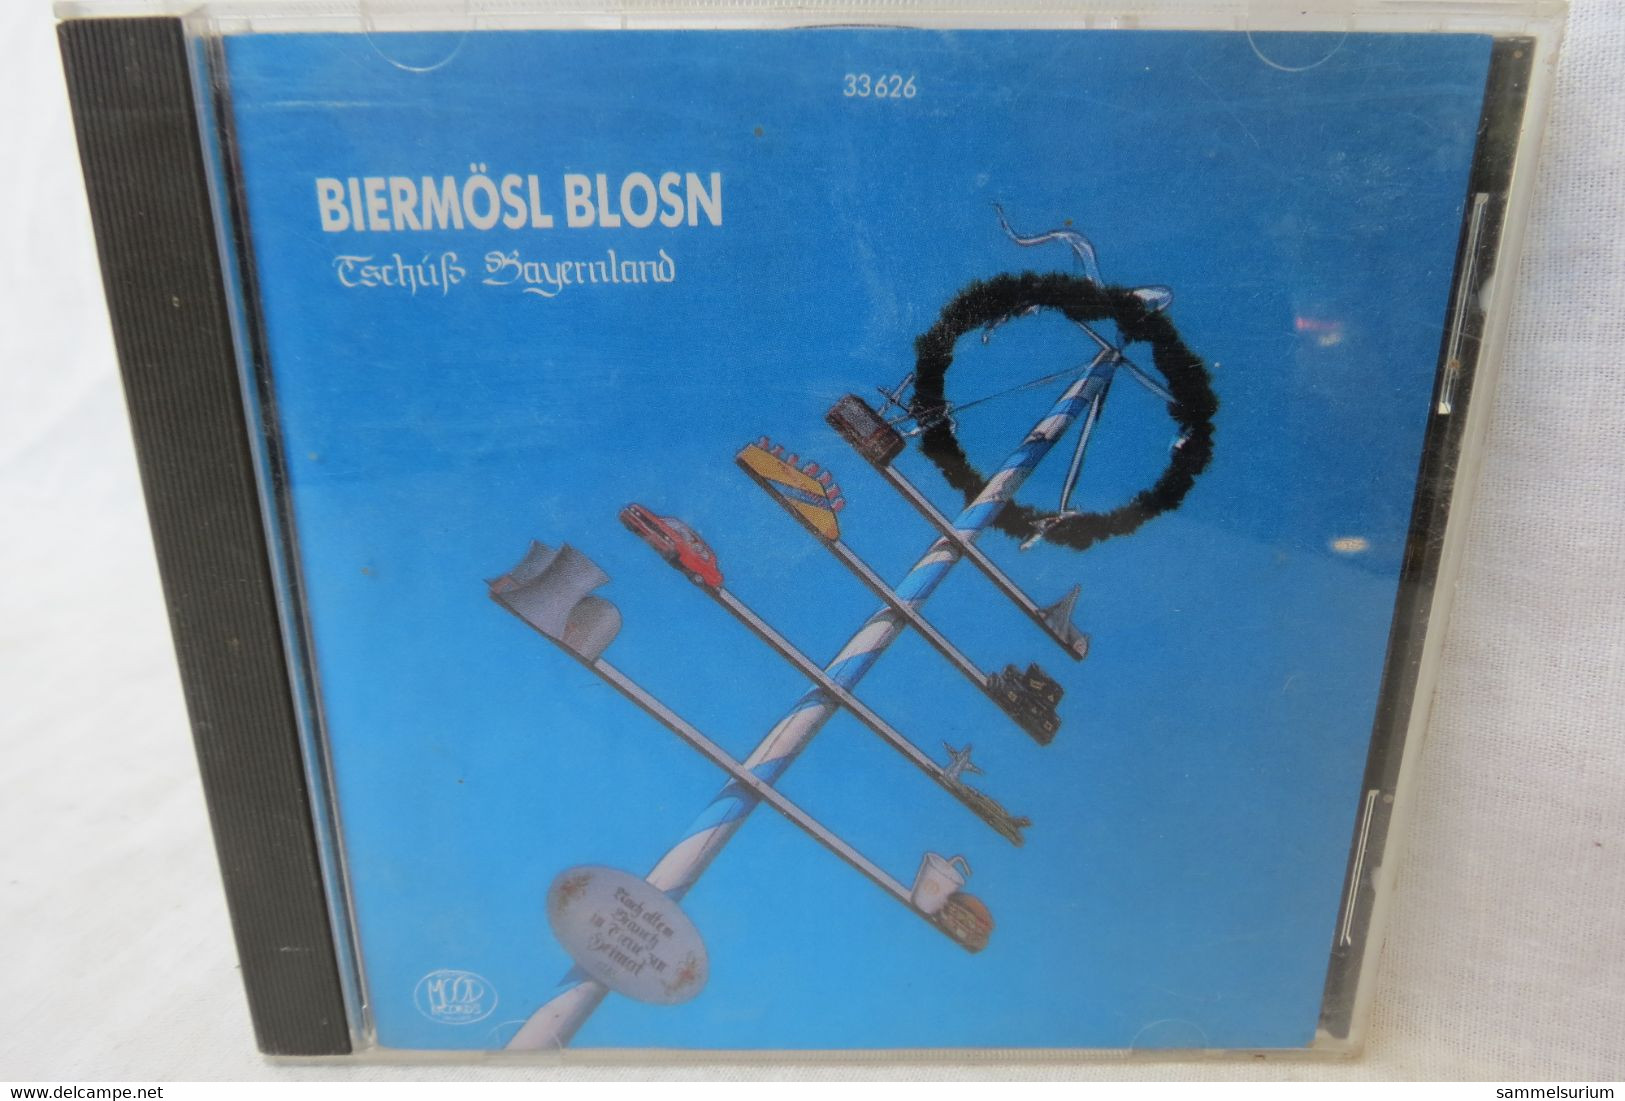 CD "Biermösl Blosn" Tschüß Bayernland - Humour, Cabaret